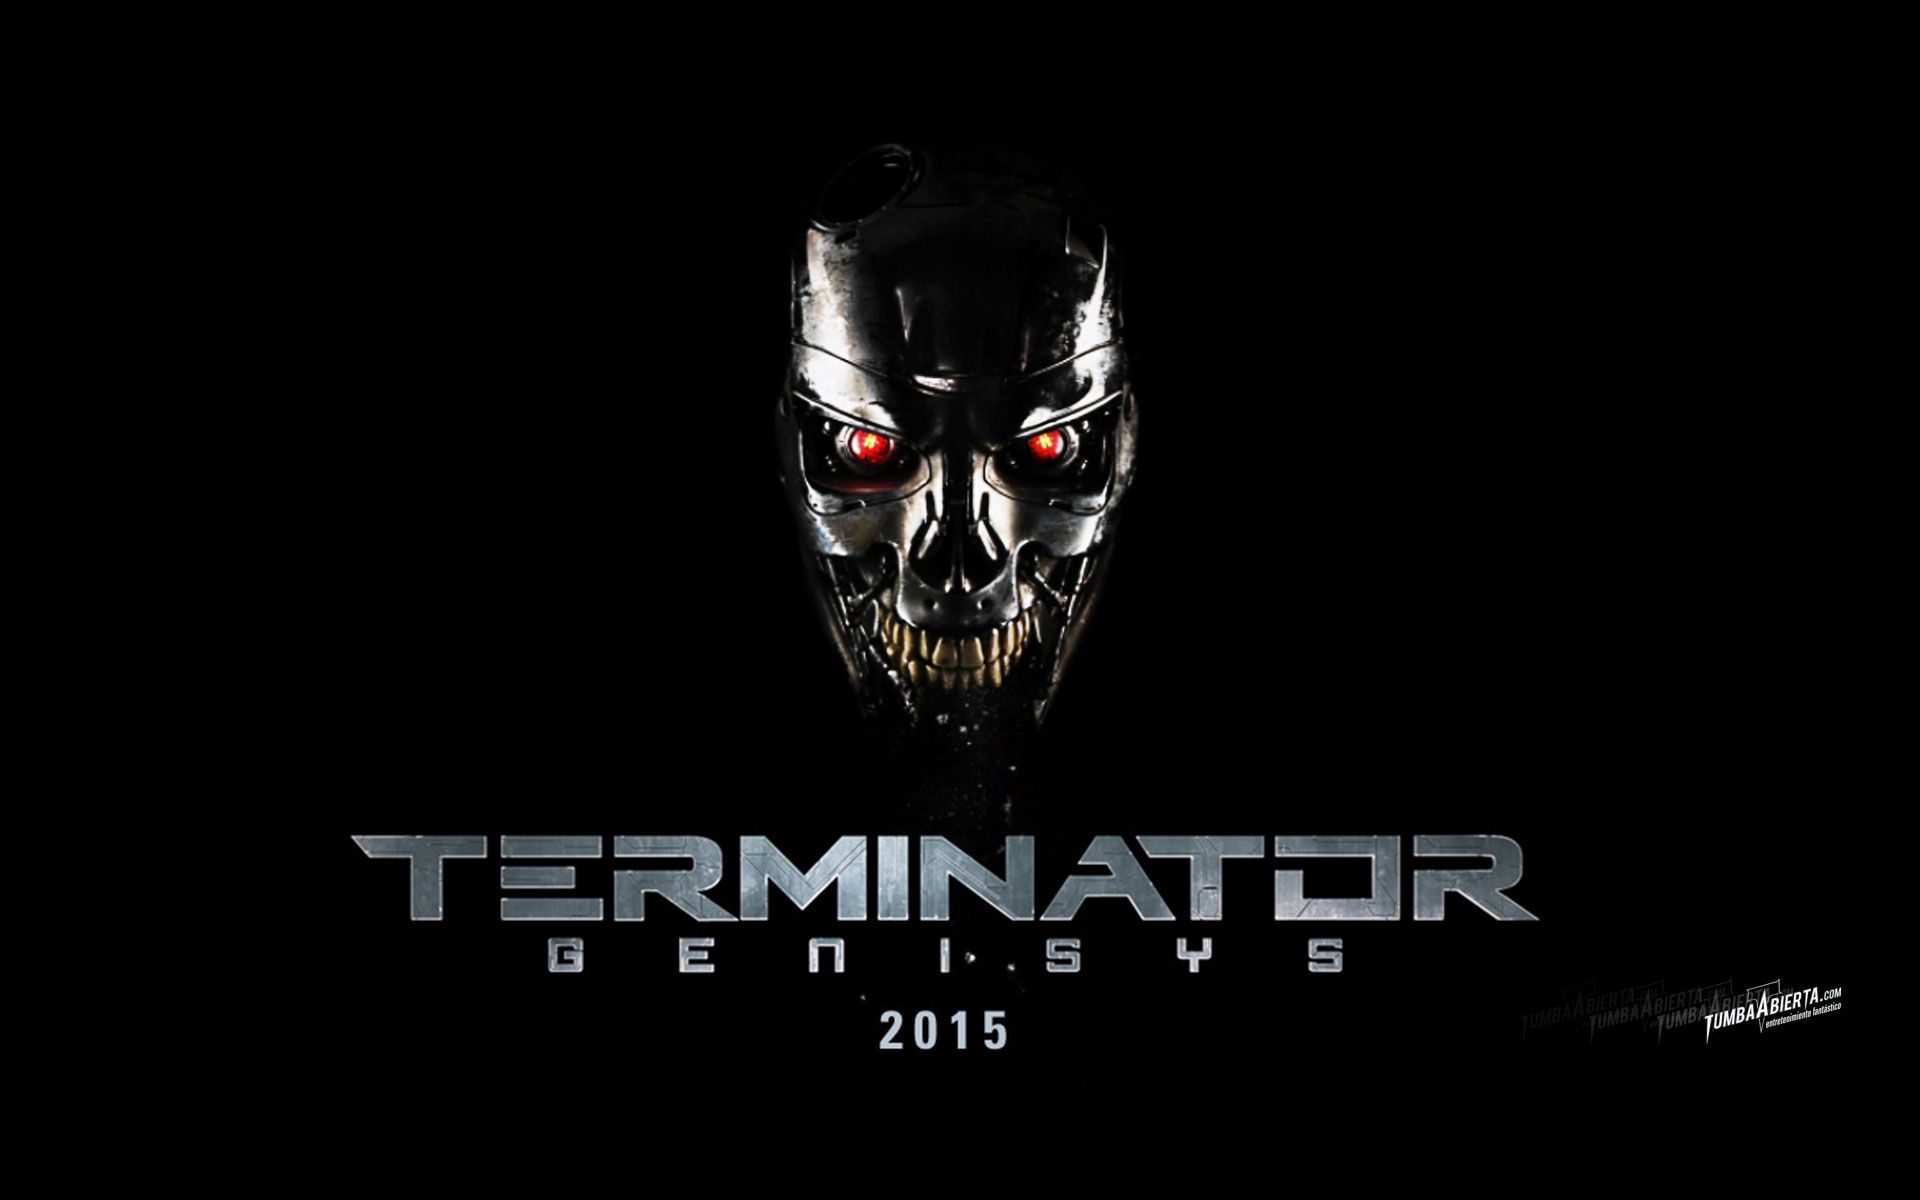 Terminator Genisys Background. Terminator Salvation Wallpaper, Deathstroke Terminator Wallpaper and Terminator 2: Judgment Day Wallpaper